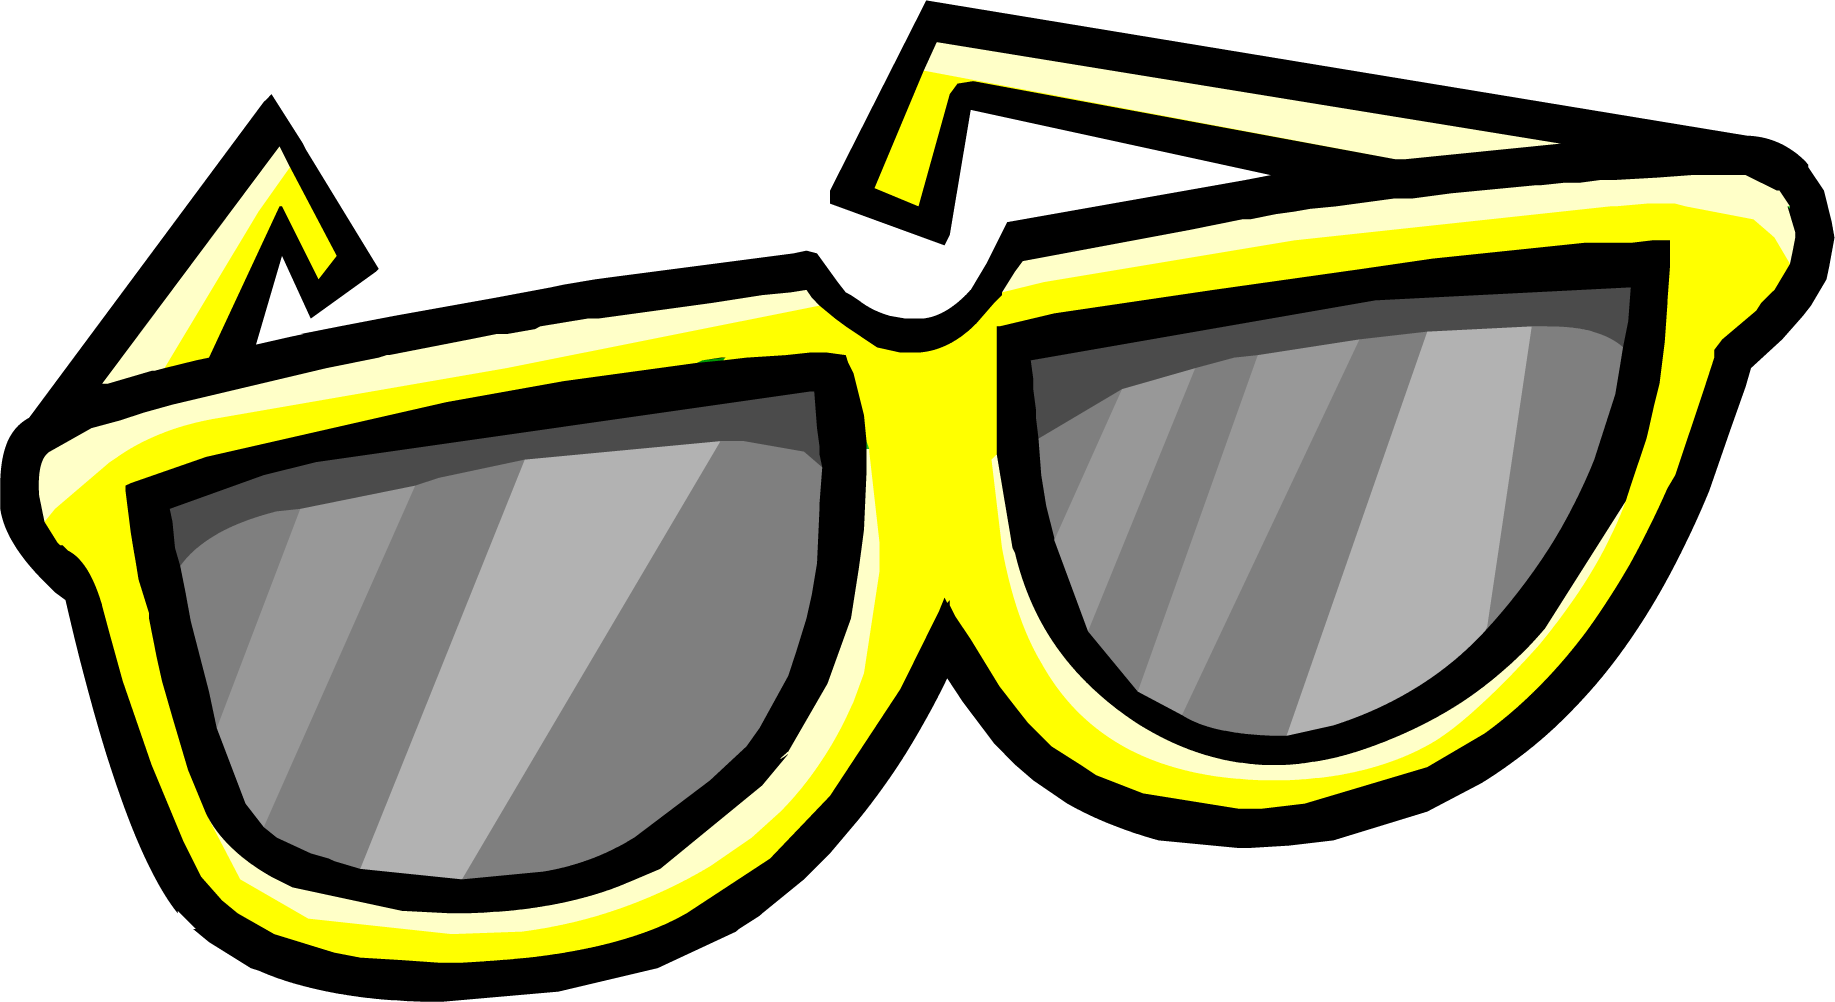 Eyeglasses clipart theme. Image giant yellow sunglasses